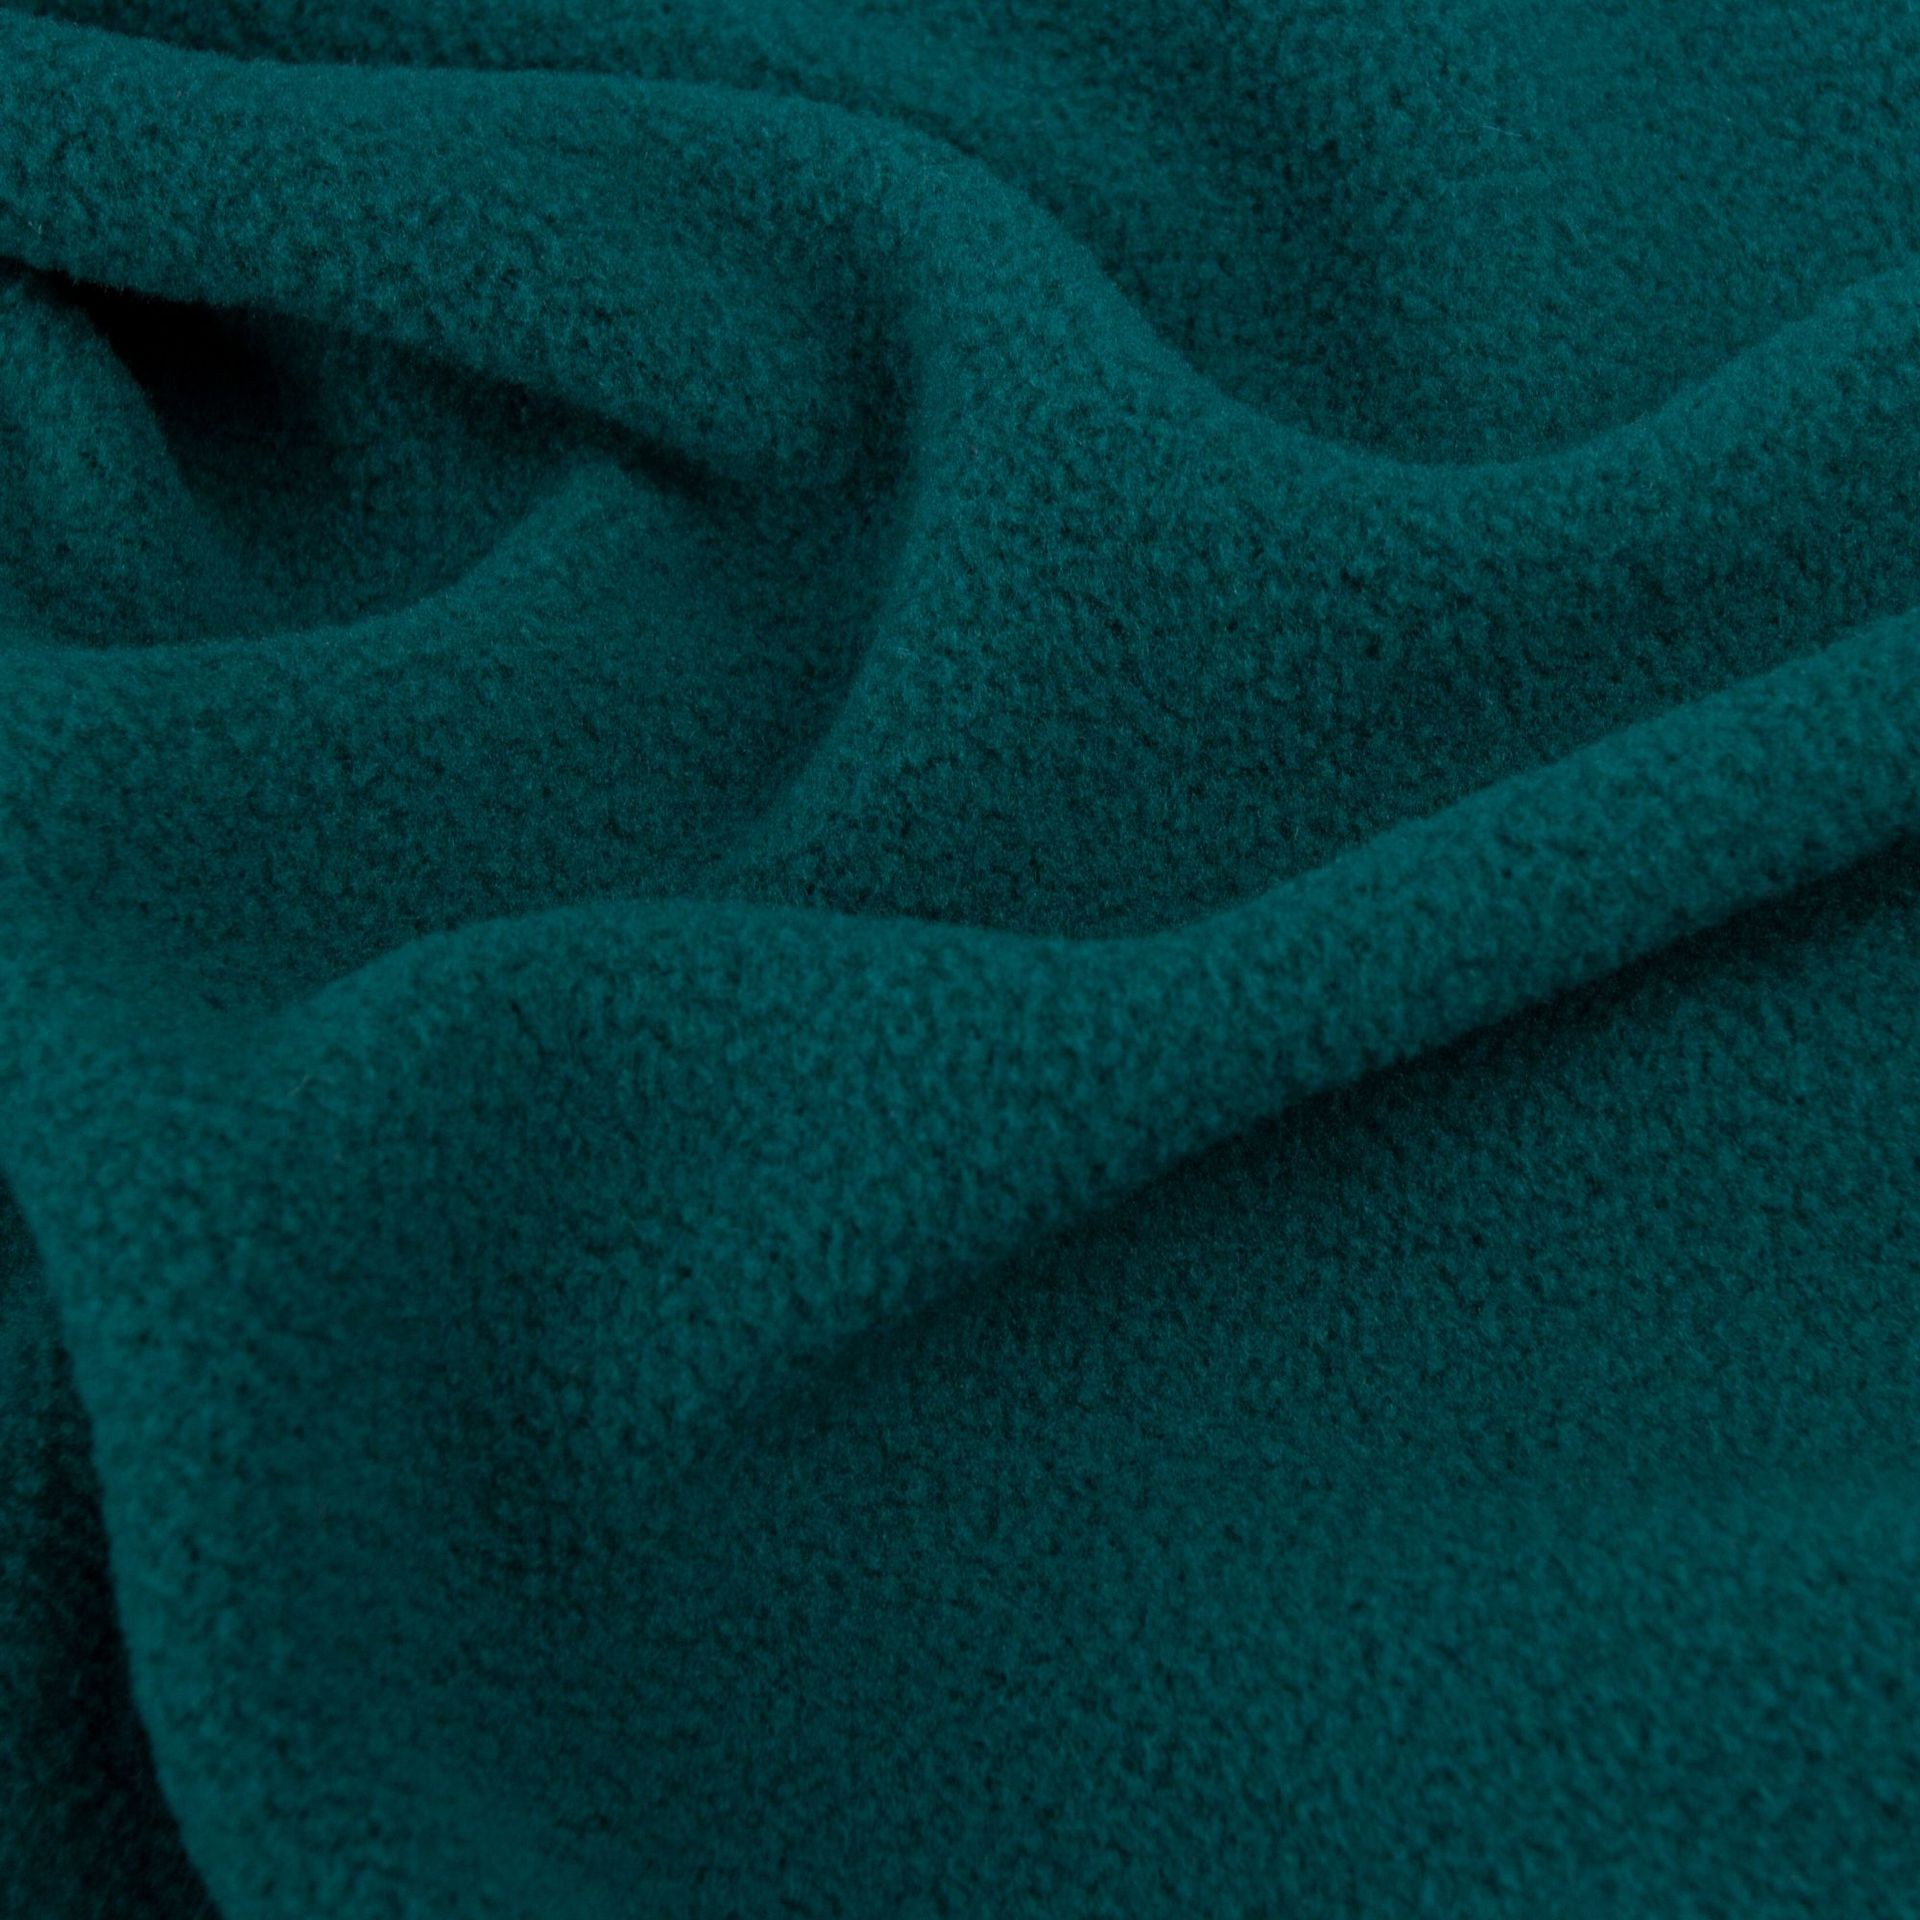 Rpet fleece, fleece recycled GRS certification manufacturers, Recycled Flannelette, recycled fleece fabric